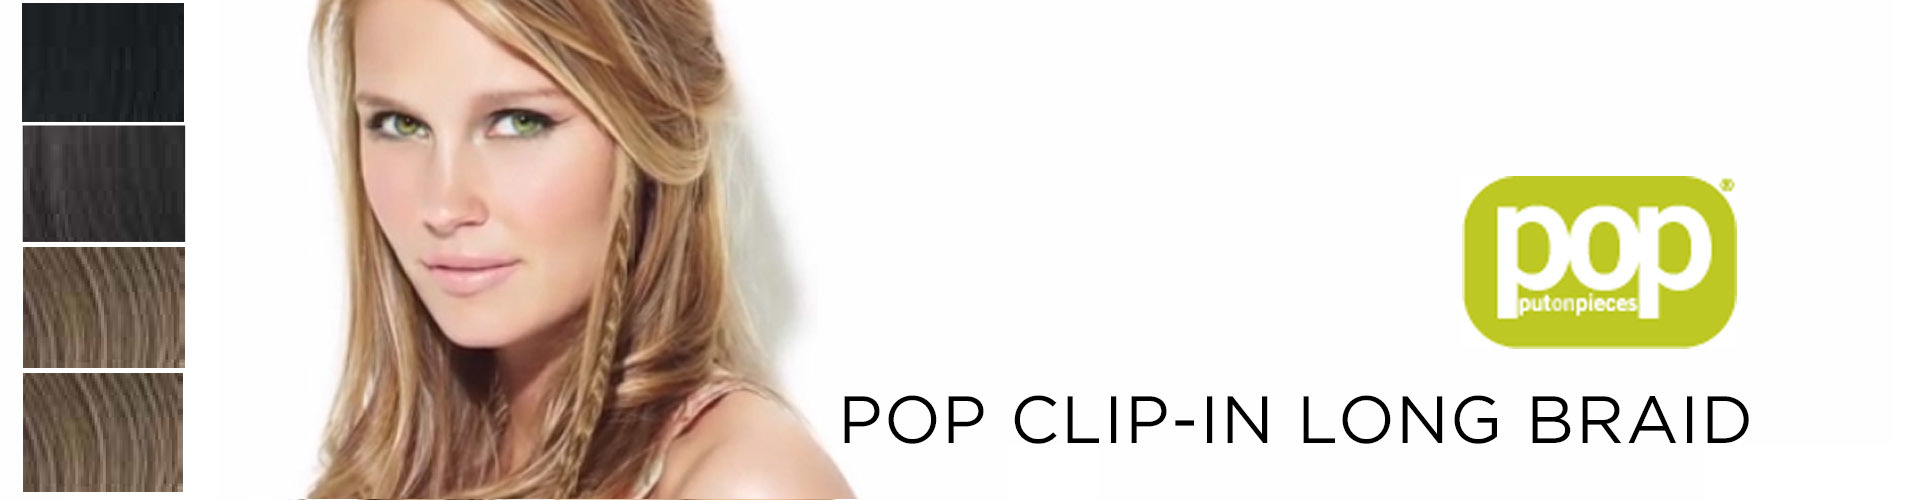 POP Clip-In Long Braid (© Great Lengths)